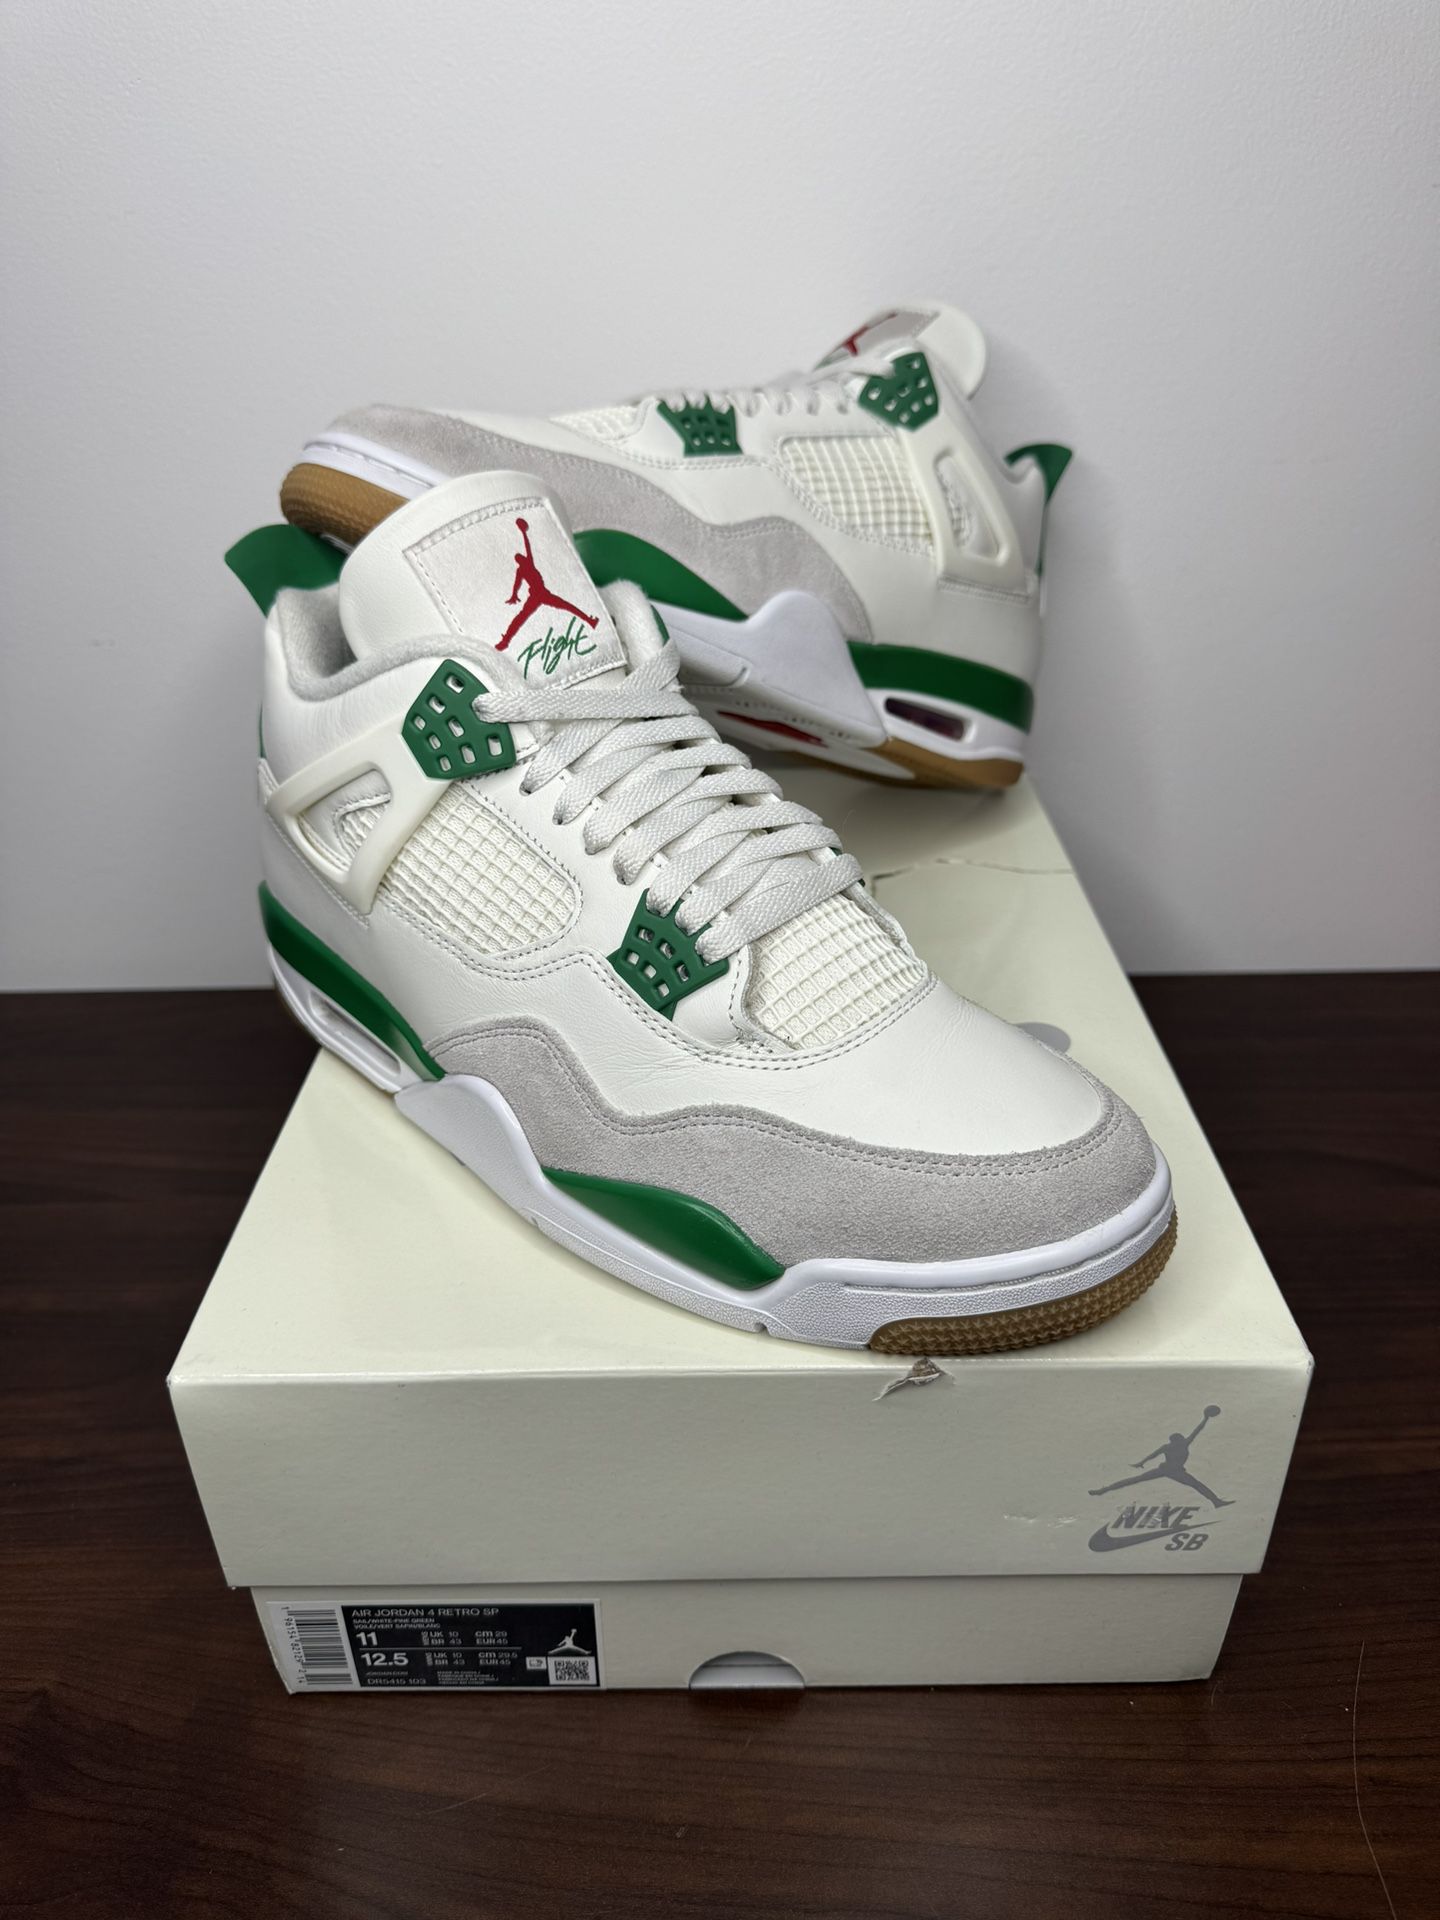 Jordan 4 SB Pine Green Size 11 $550